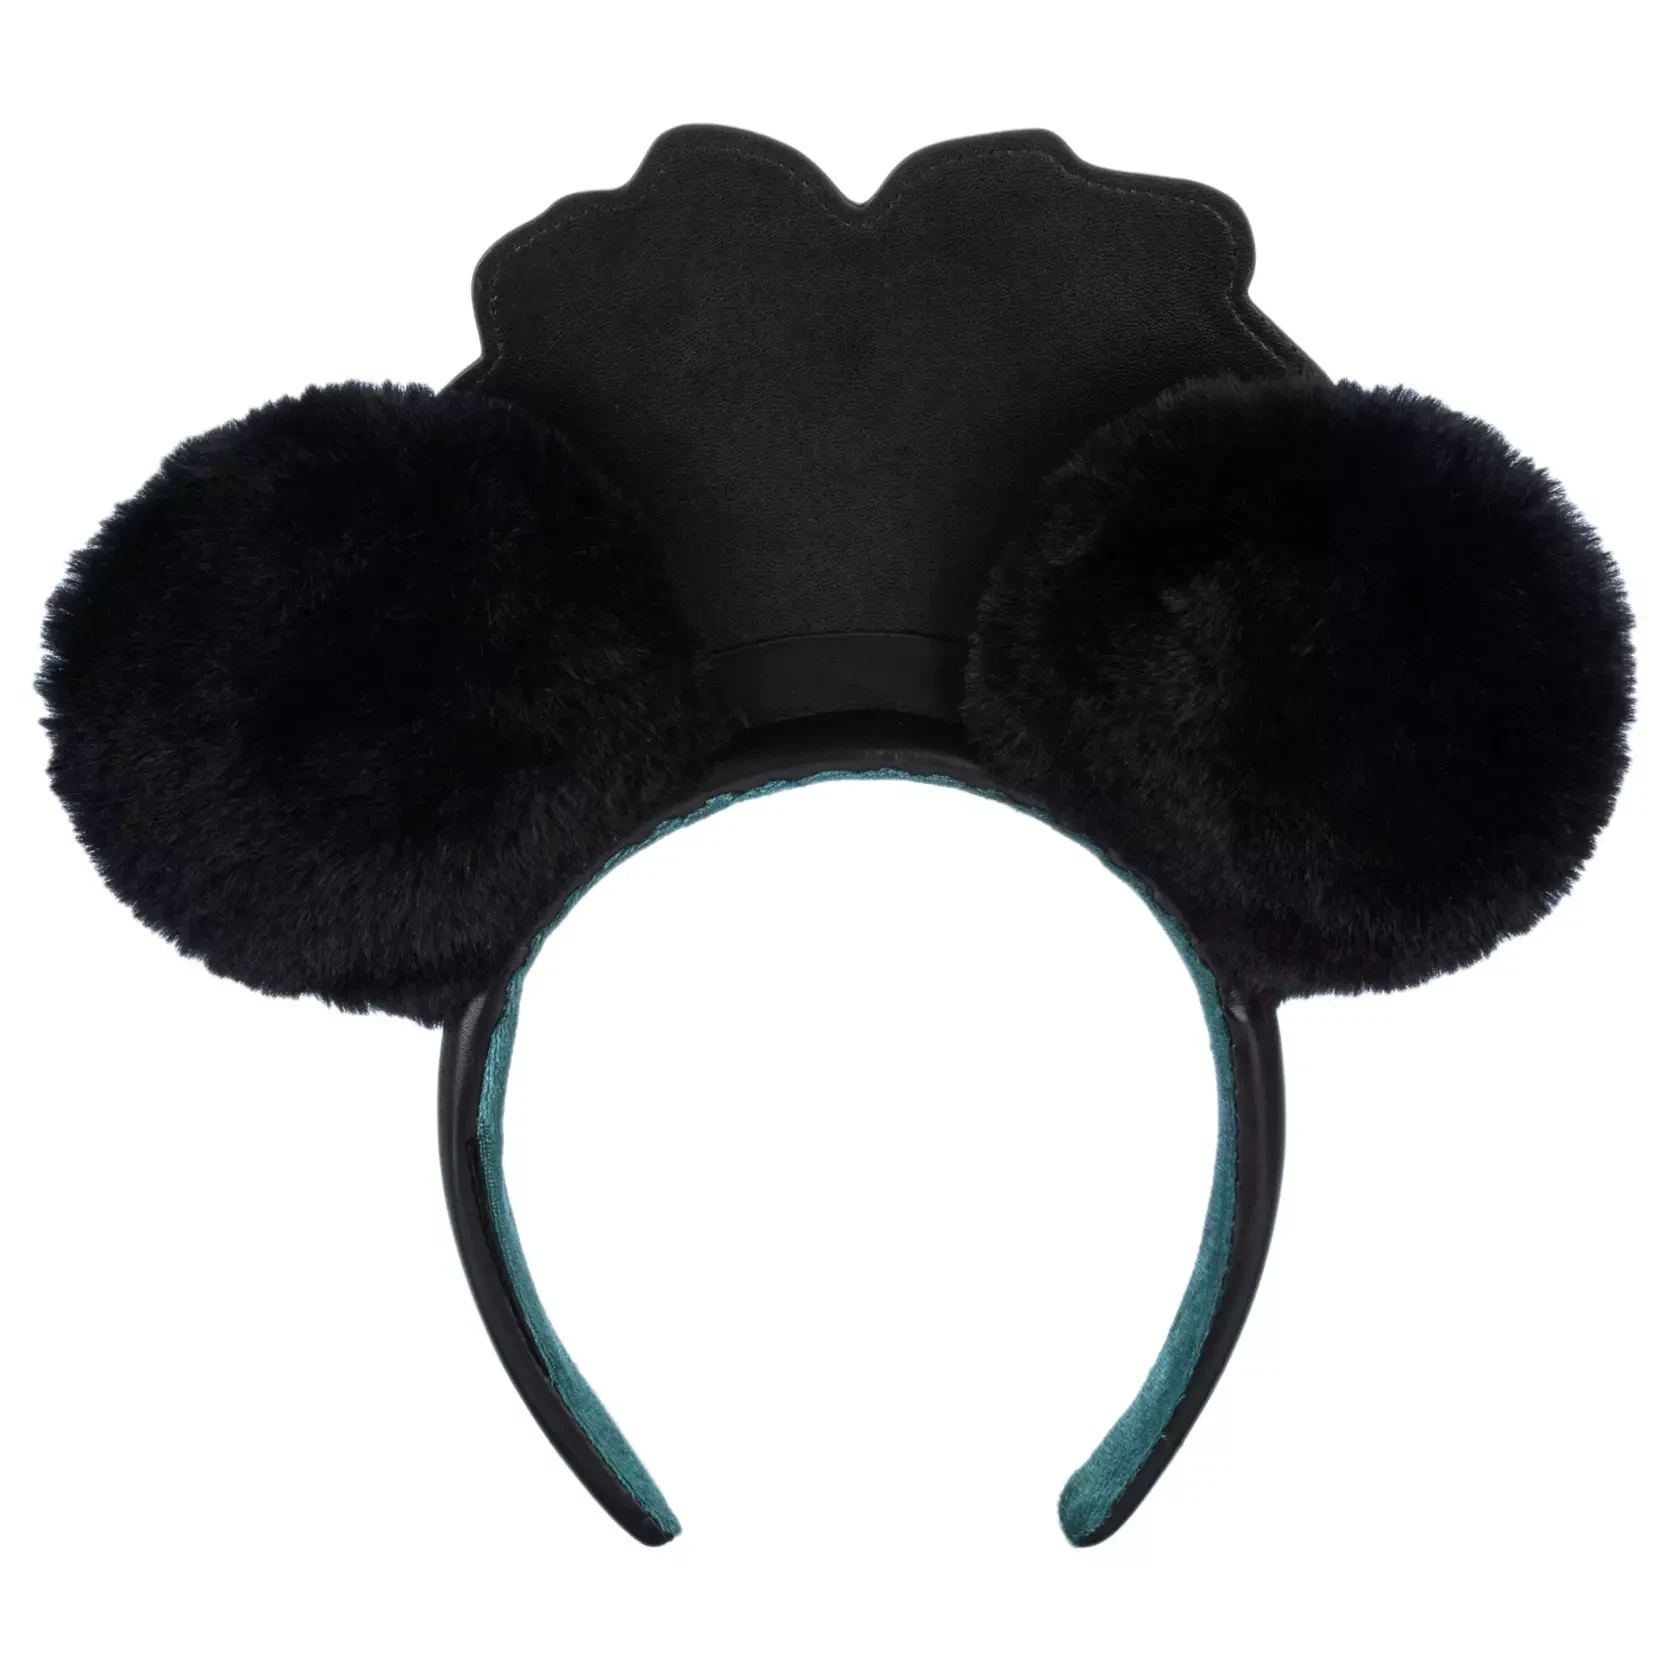 item Disney Parks - Minnie Mouse Ears Headband -Halloween Glow-in-the-Dark 4505055215918-2fmtwebpqlt70wid1680